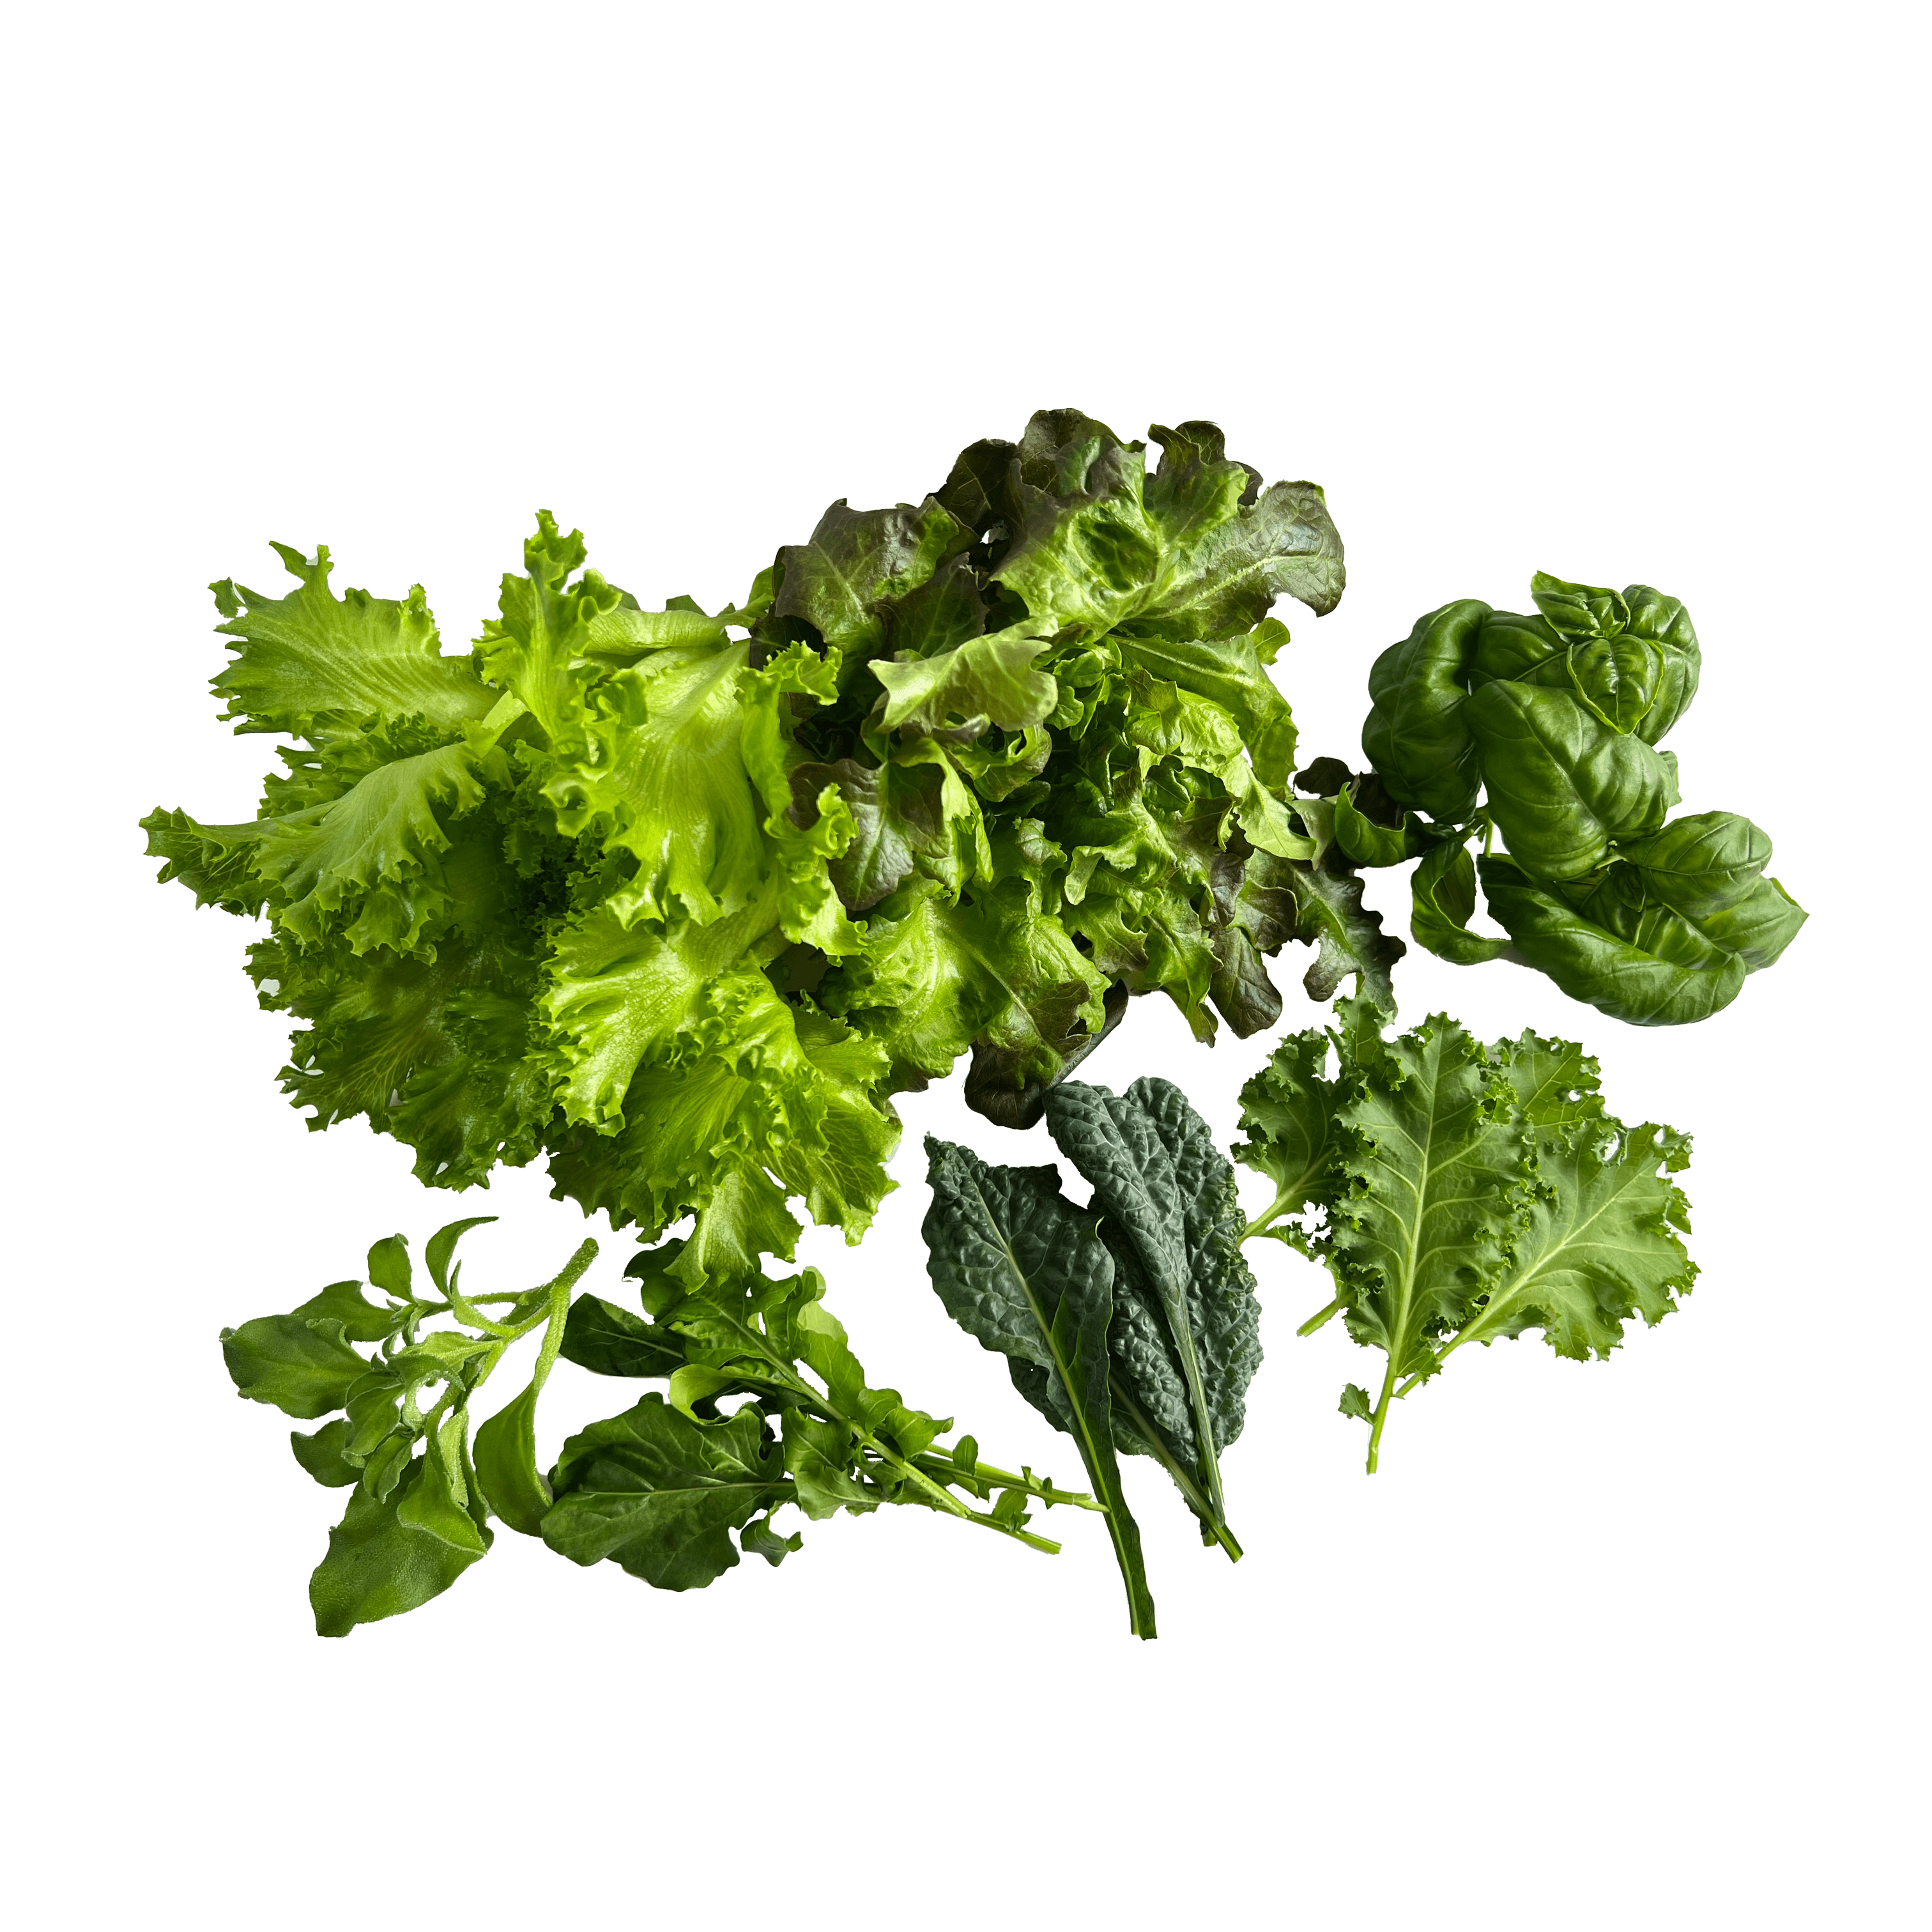 Small leafy bundle with lettuce, kale, arugula, ice plants and basil